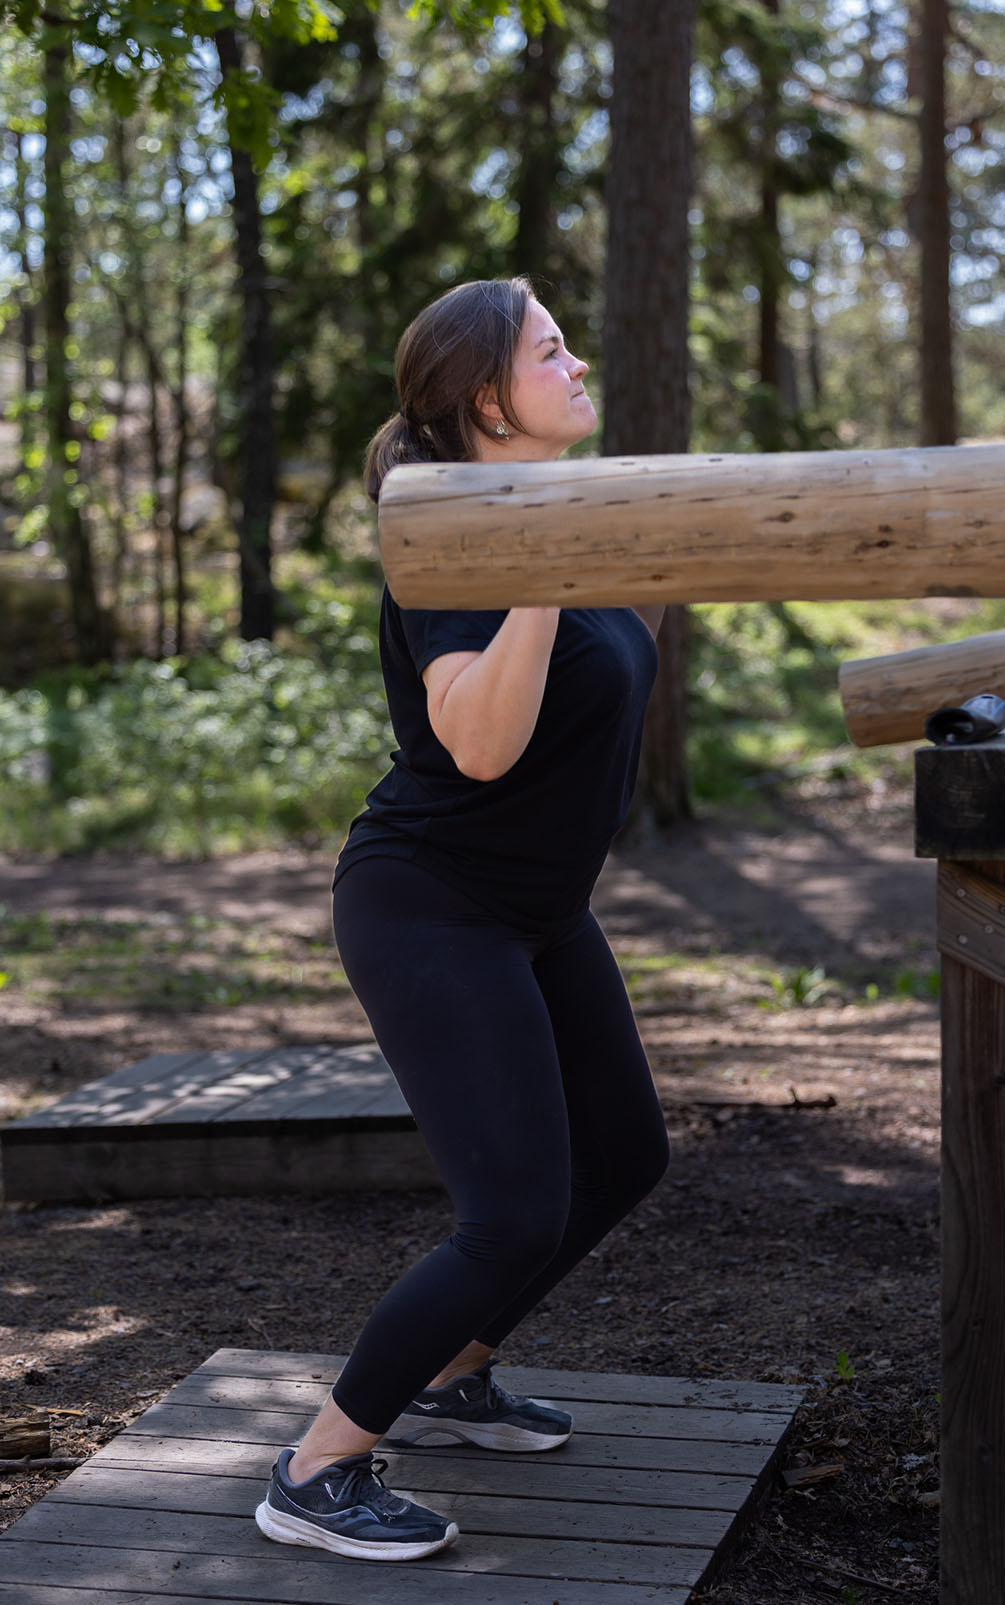 Emma William Olsson tränar rygglyft i utegymmet